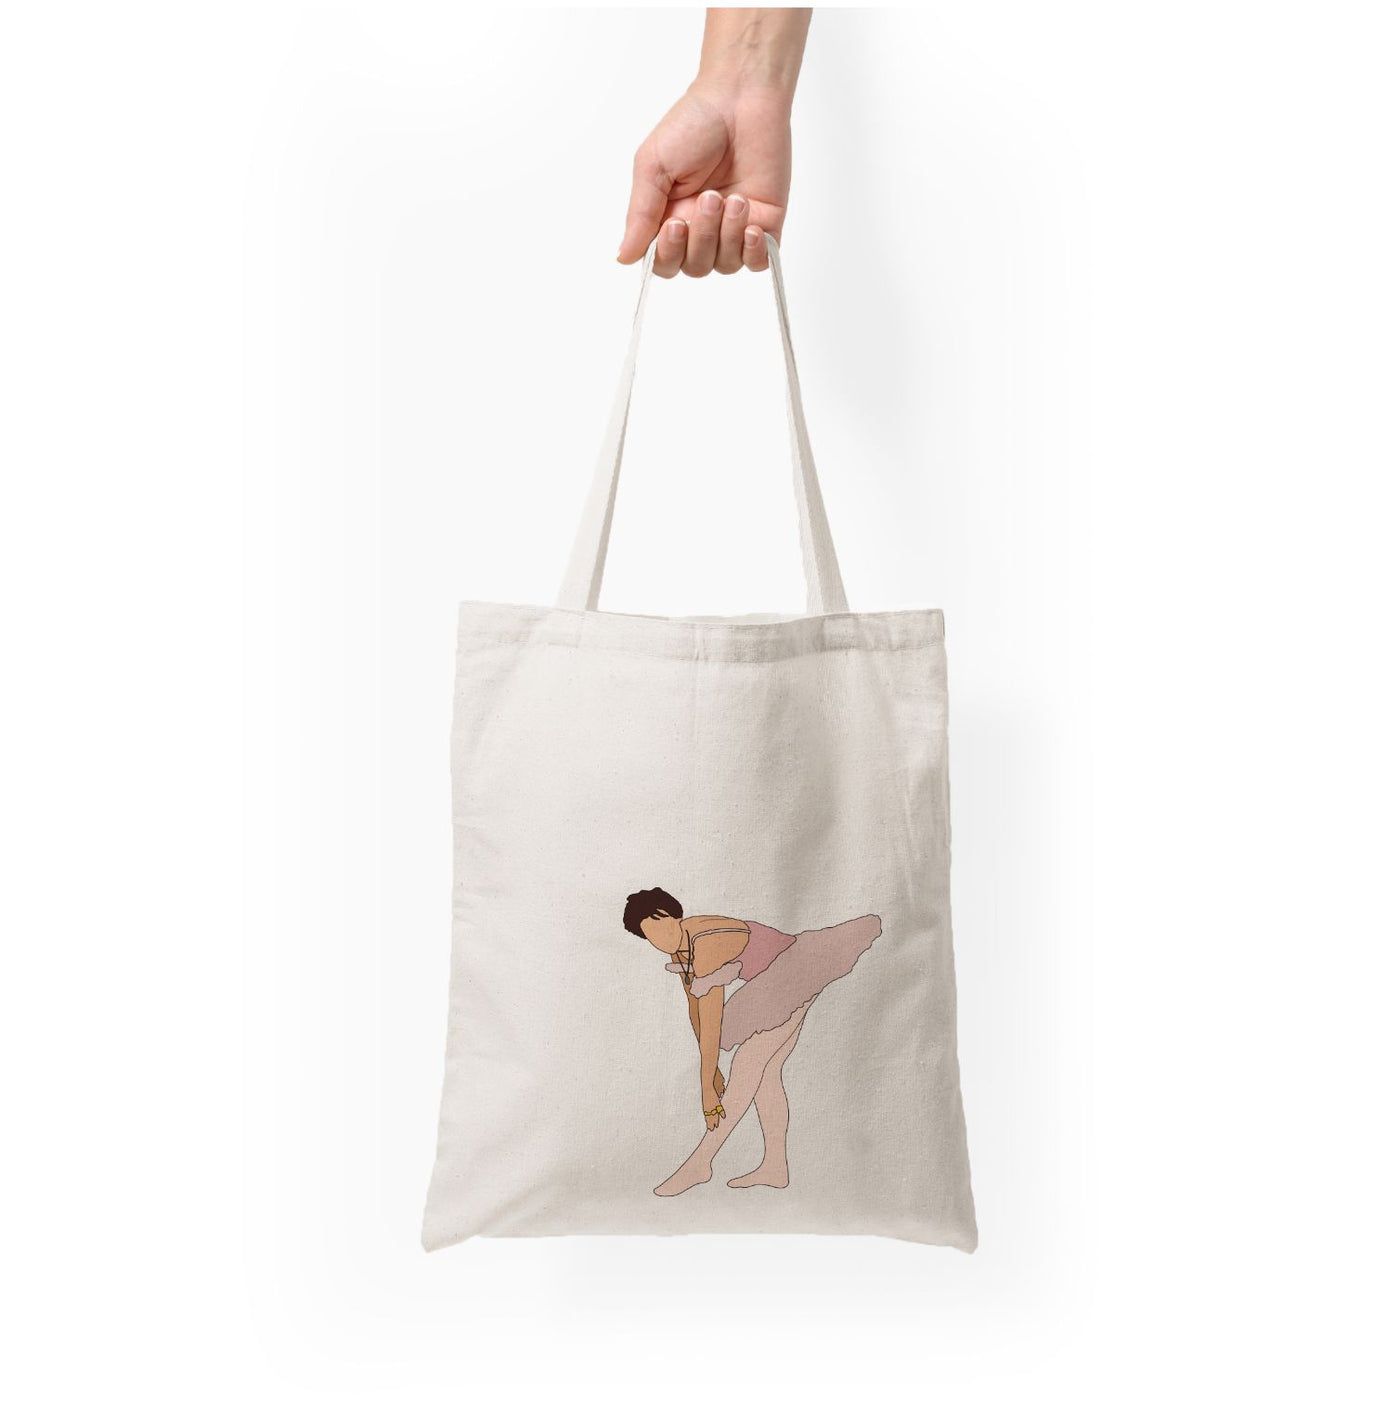 Ballerina - Harry Tote Bag